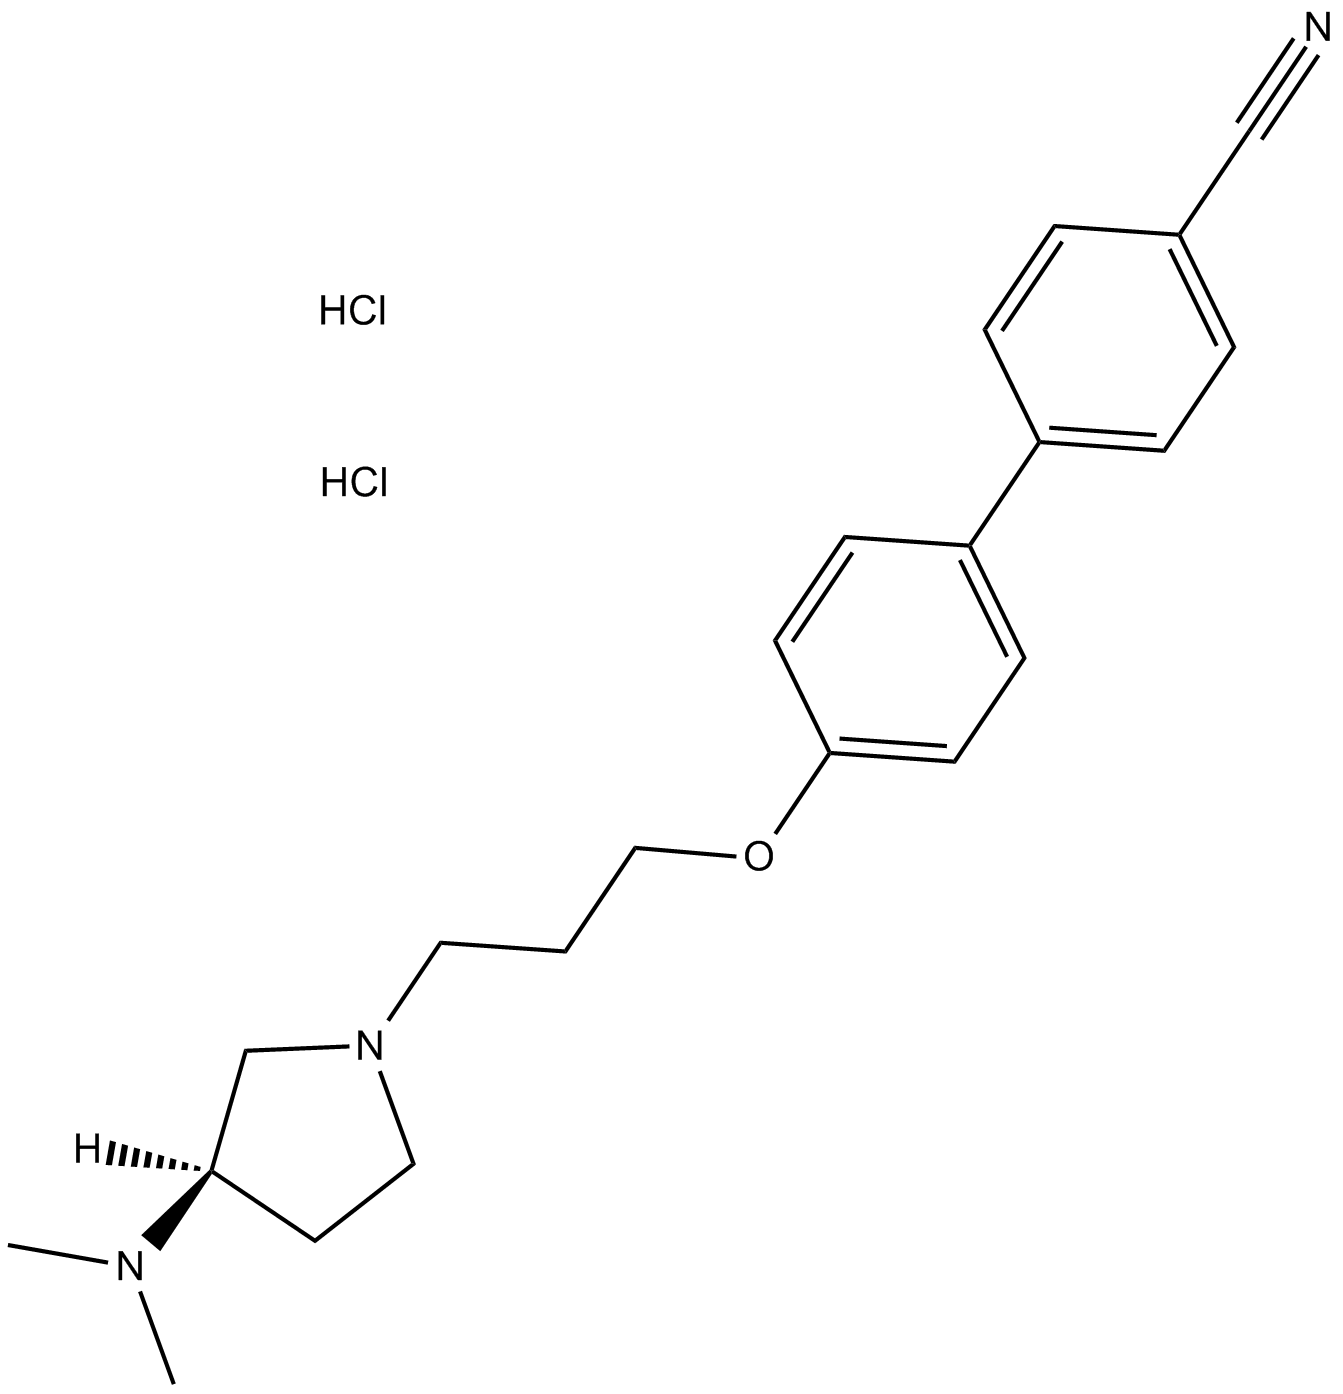 A 331440 dihydrochloride